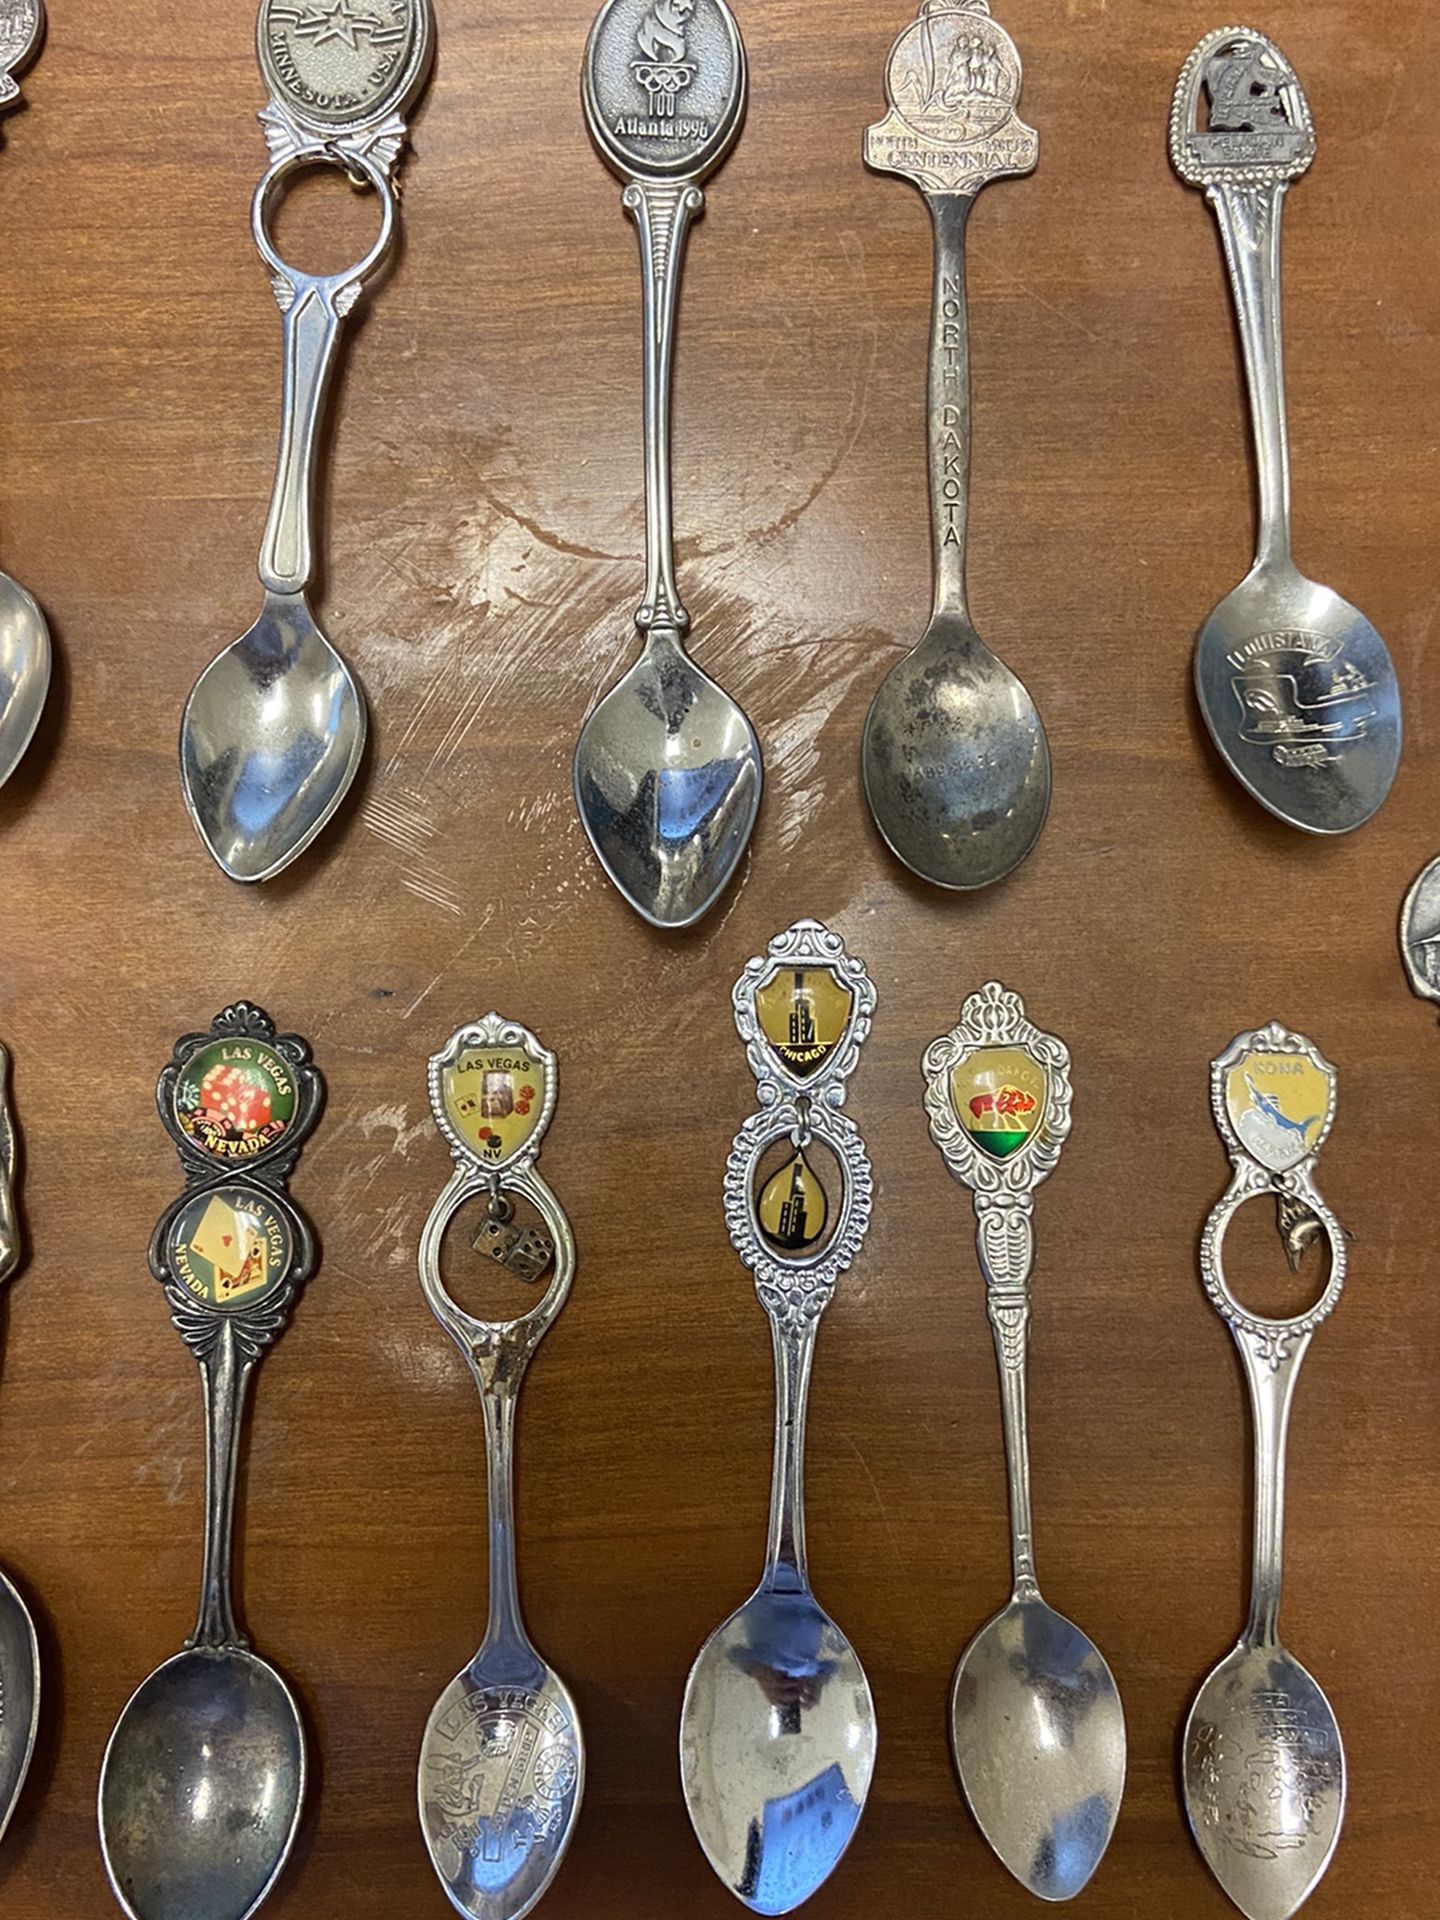 12 souvenir spoons